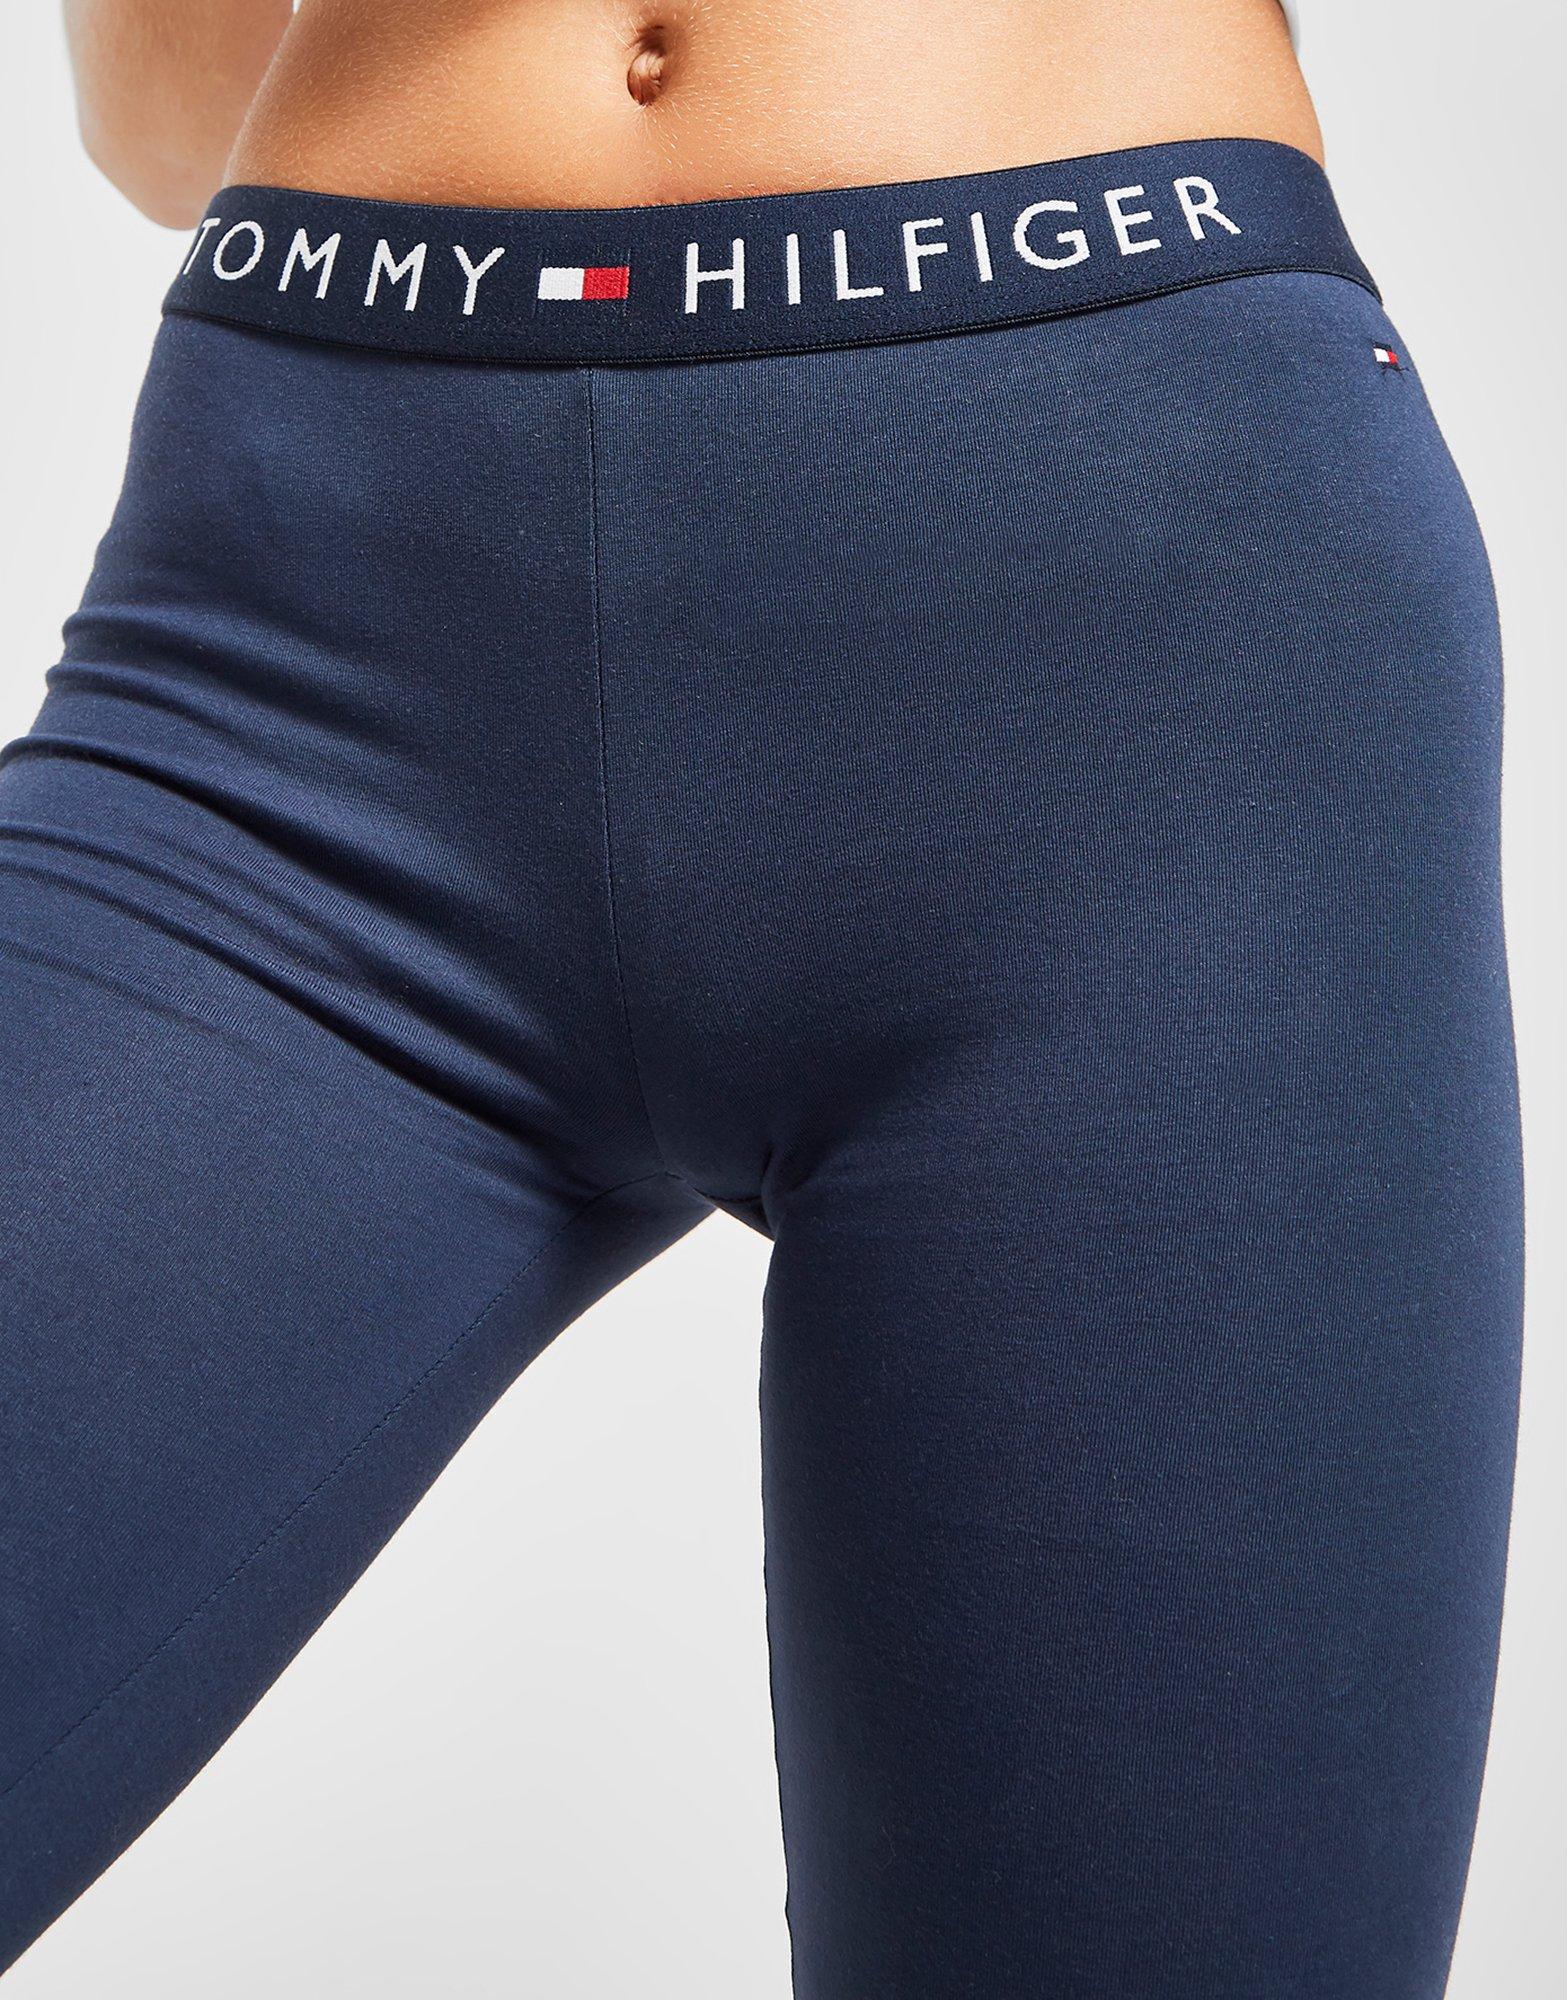 tommy hilfiger origin leggings